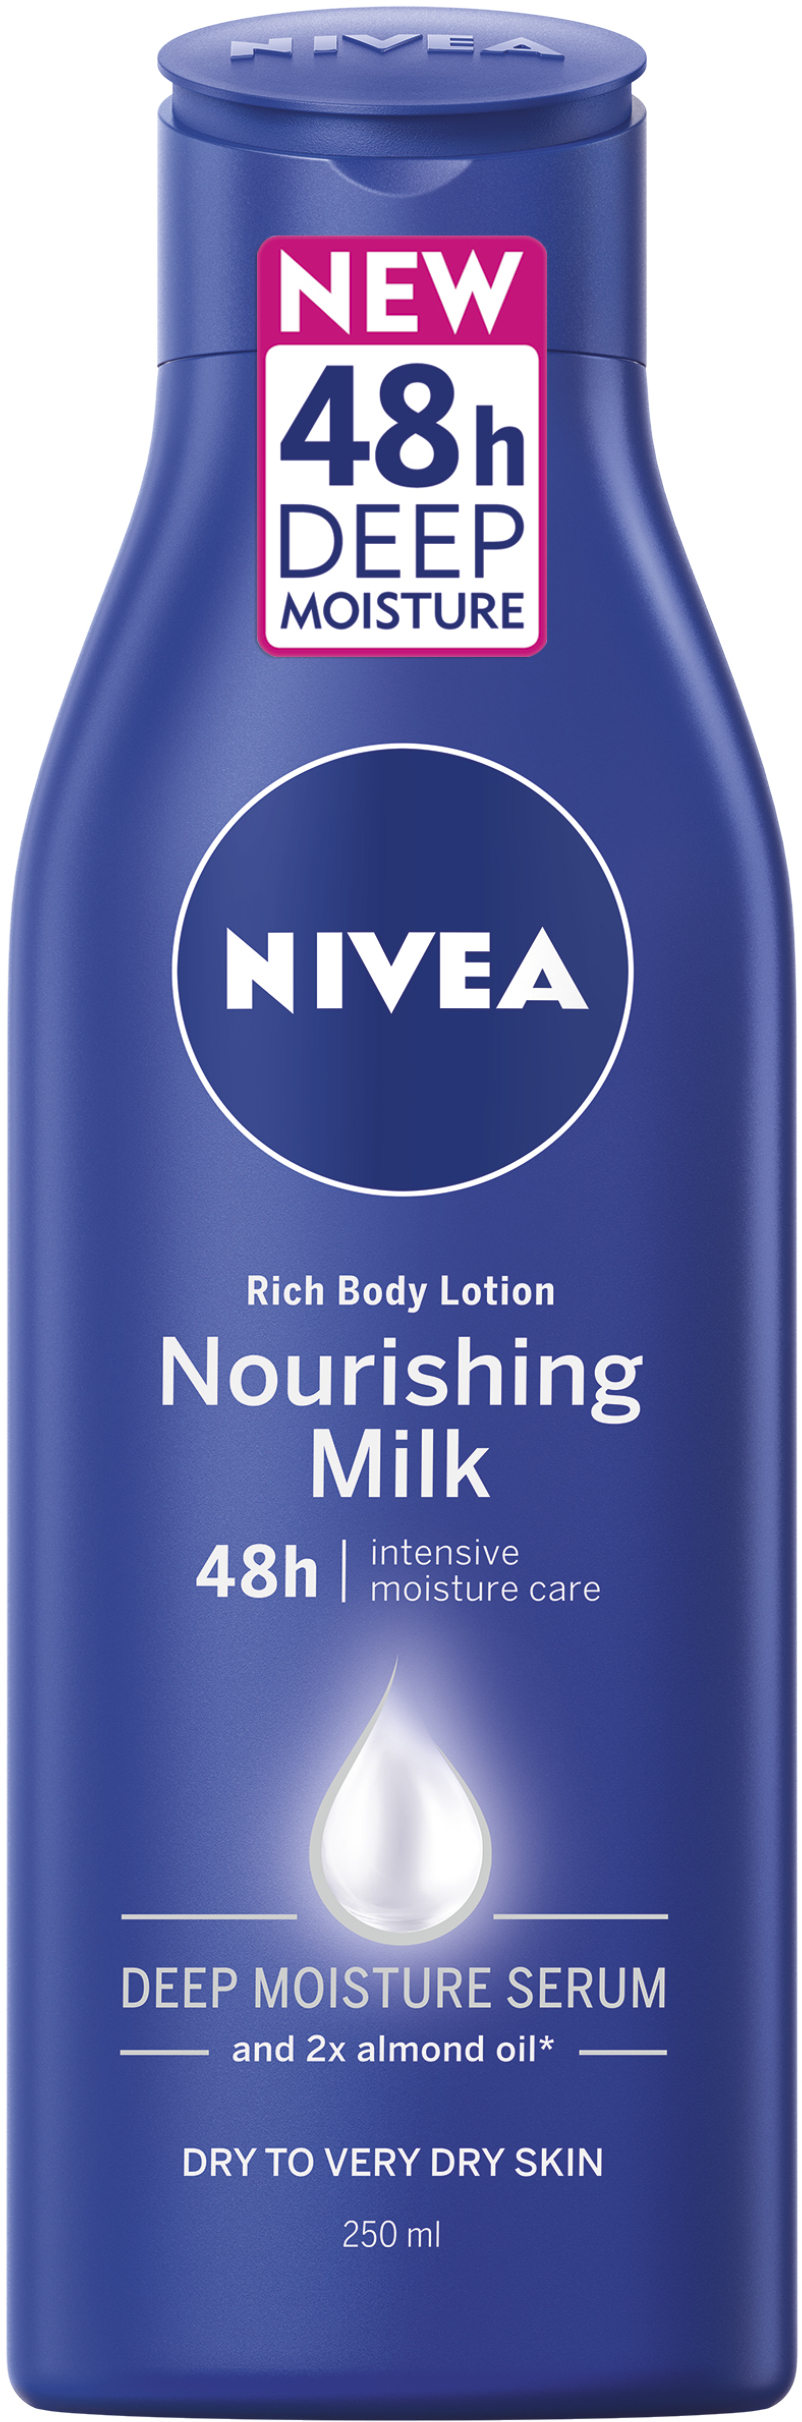 Nivea Rich Body Lotion Nourishing Milk 48h 250 ml